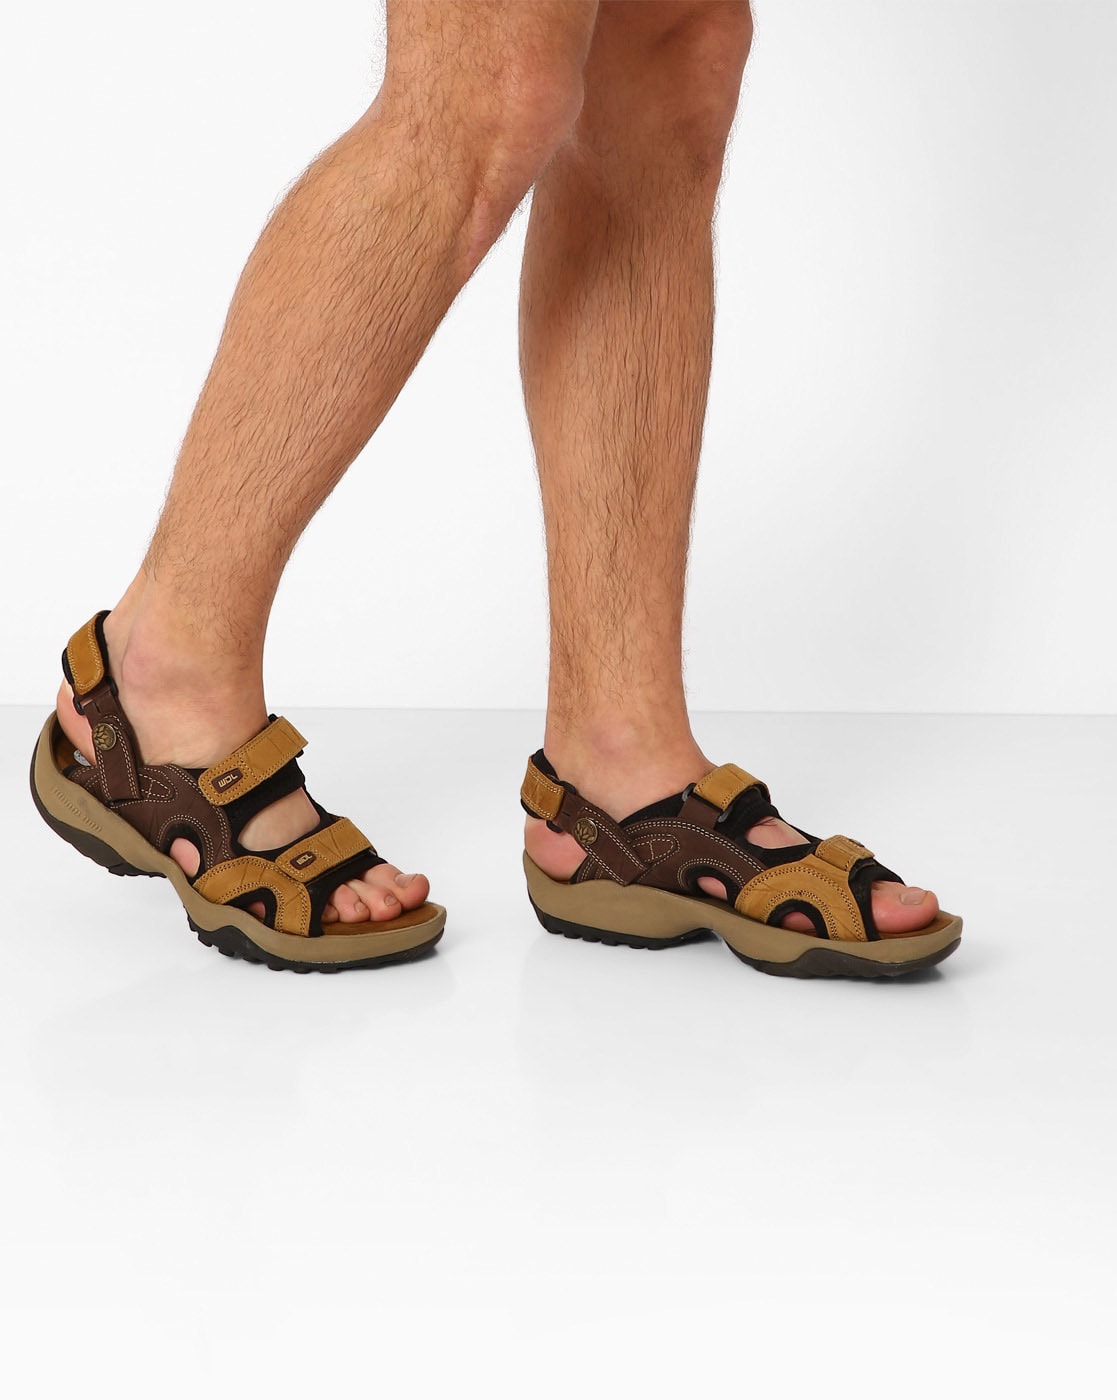 Buy Greek Leather Sandals Men Sandals Summer Shoes Handmade Online in India  - Etsy